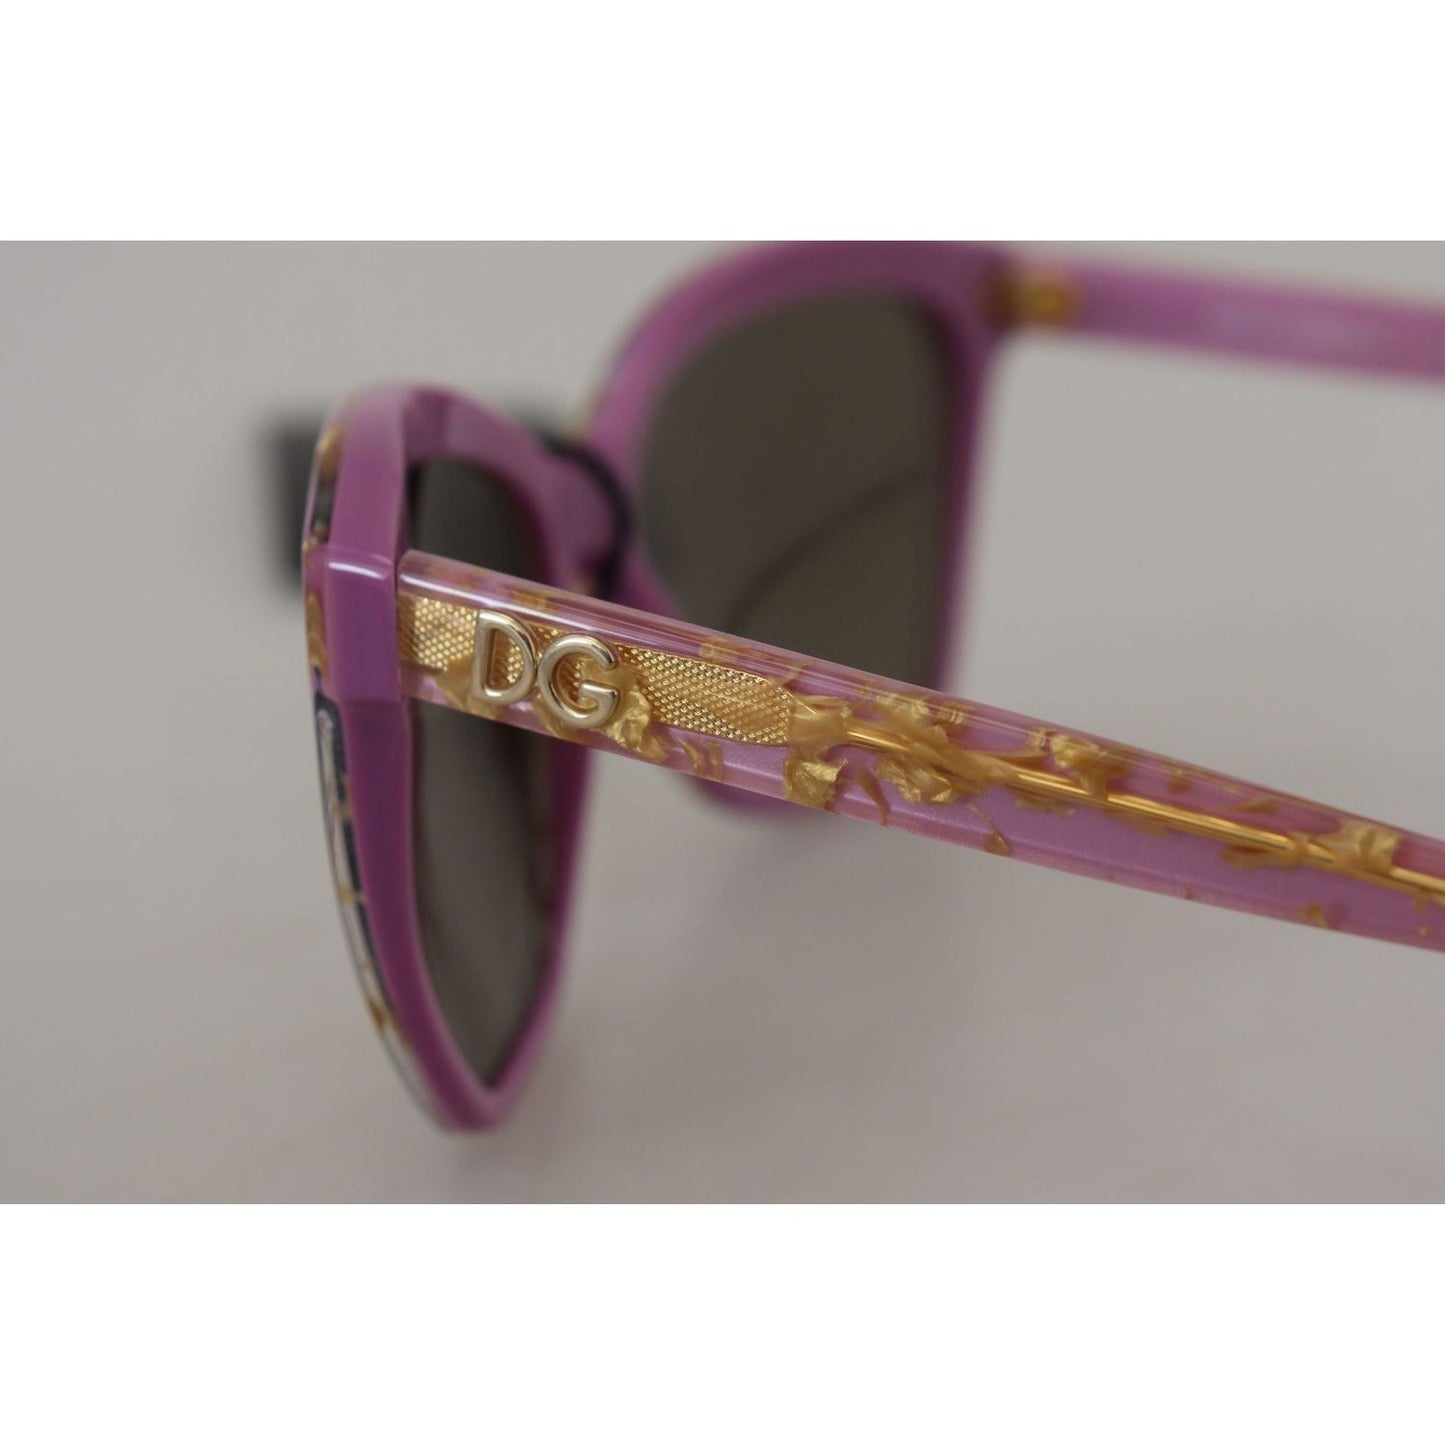 Dolce & Gabbana Elegant Violet Acetate Sunglasses violet-full-rim-rectangle-frame-shades-dg4251-sunglasses IMG_5188-scaled-35868dd5-083.jpg